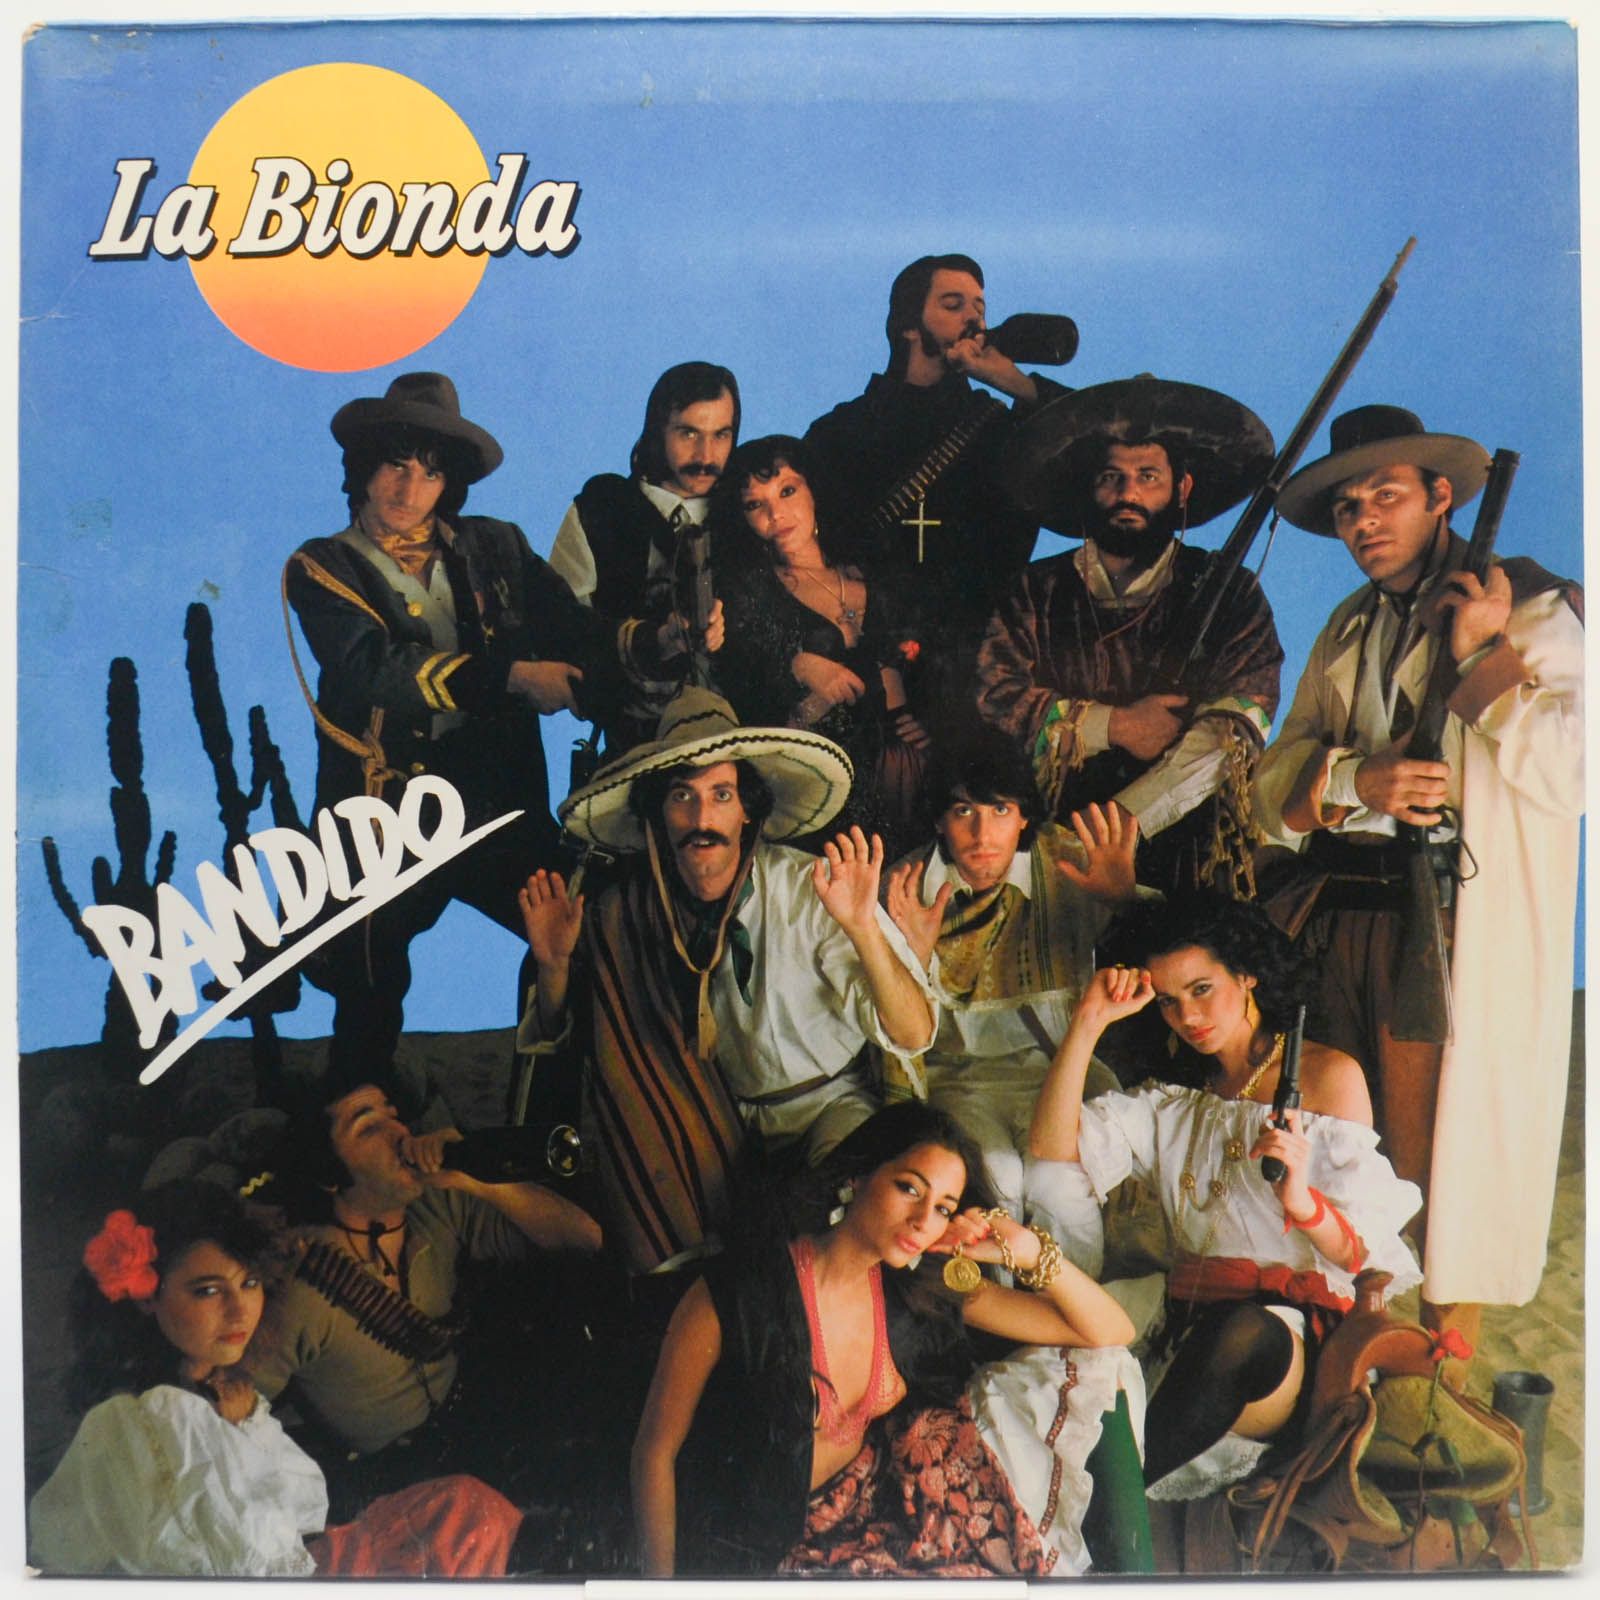 La Bionda — Bandido (France), 1979